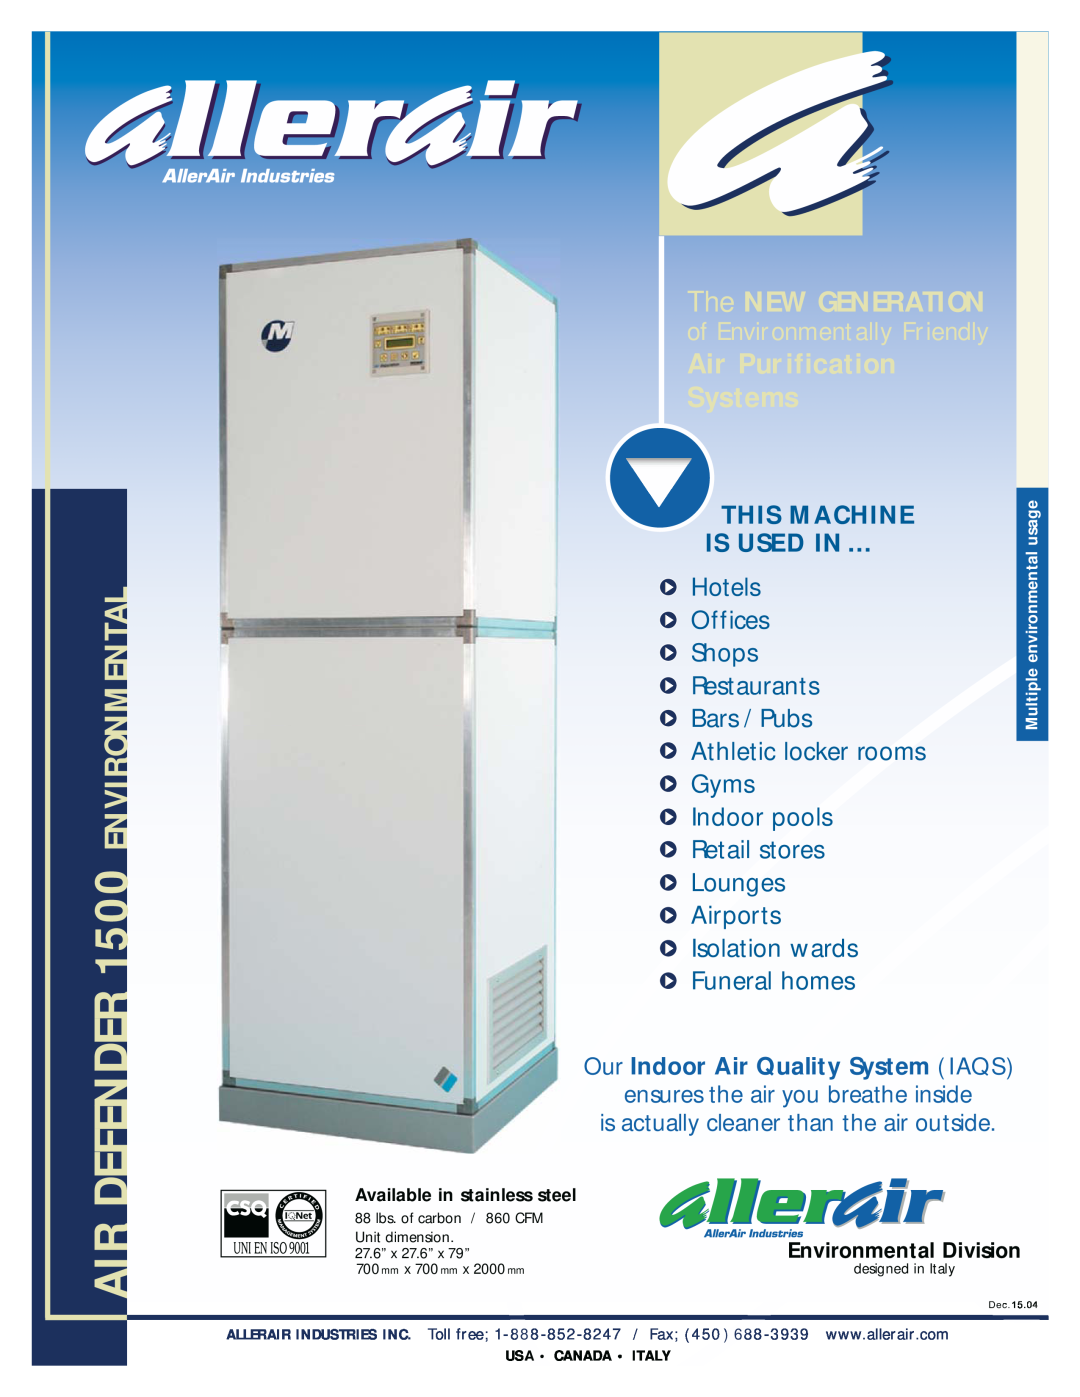 AllerAir manual AIR DEFENDER 1500 ENVIRONMENTAL, The NEW GENERATION, Air Purification Systems, This Machine 